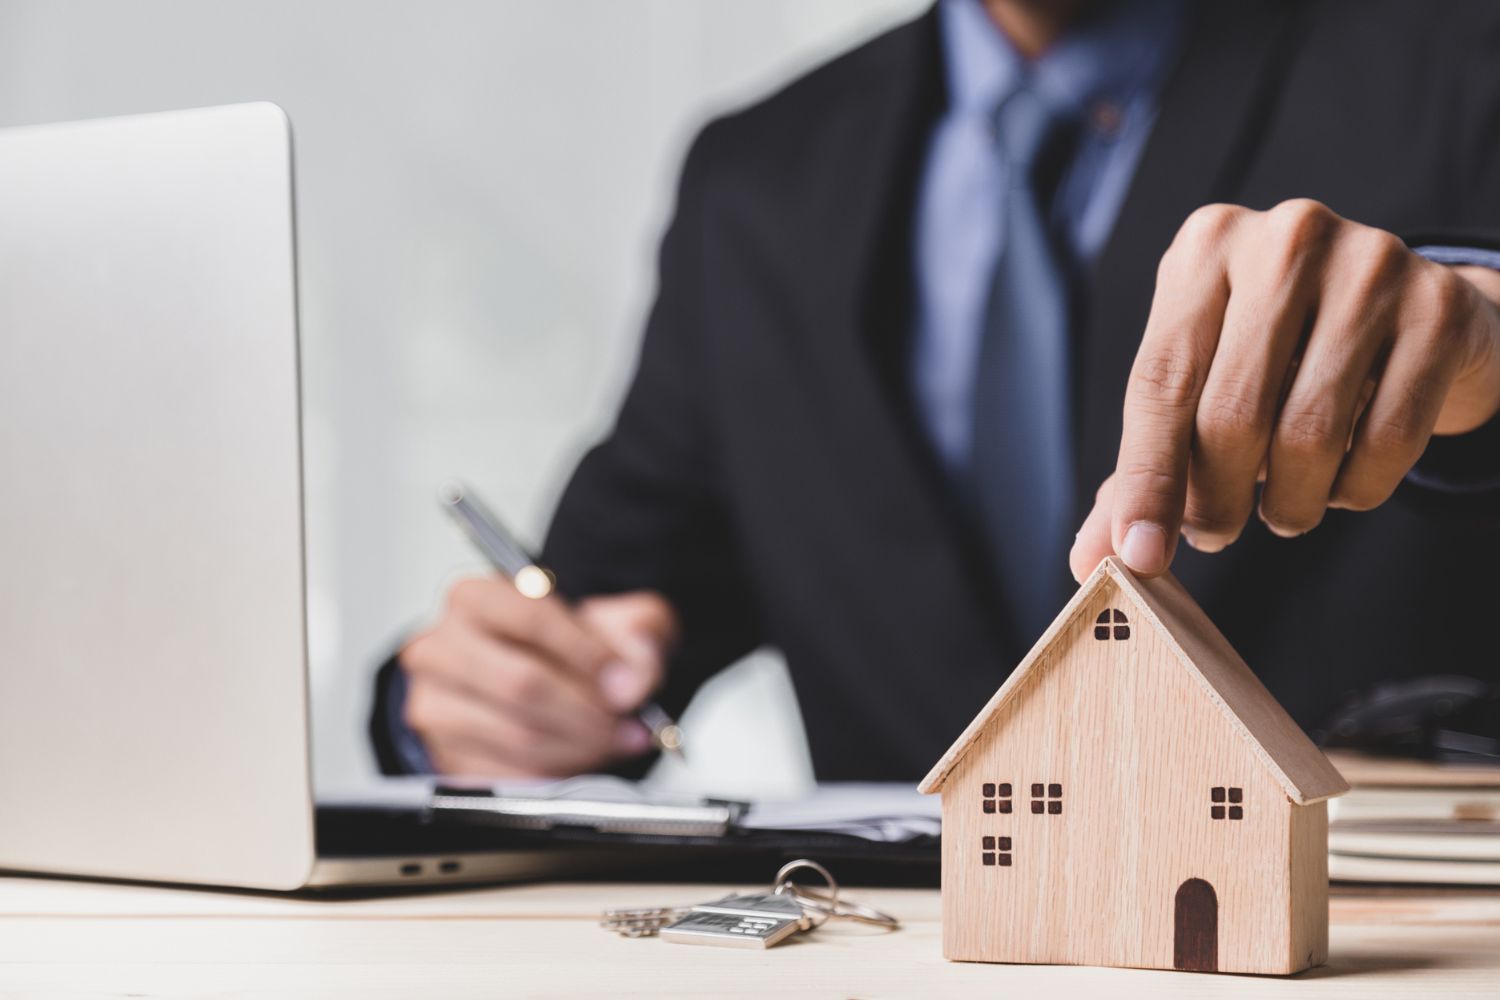 HELOC vs. Home Equity Loan